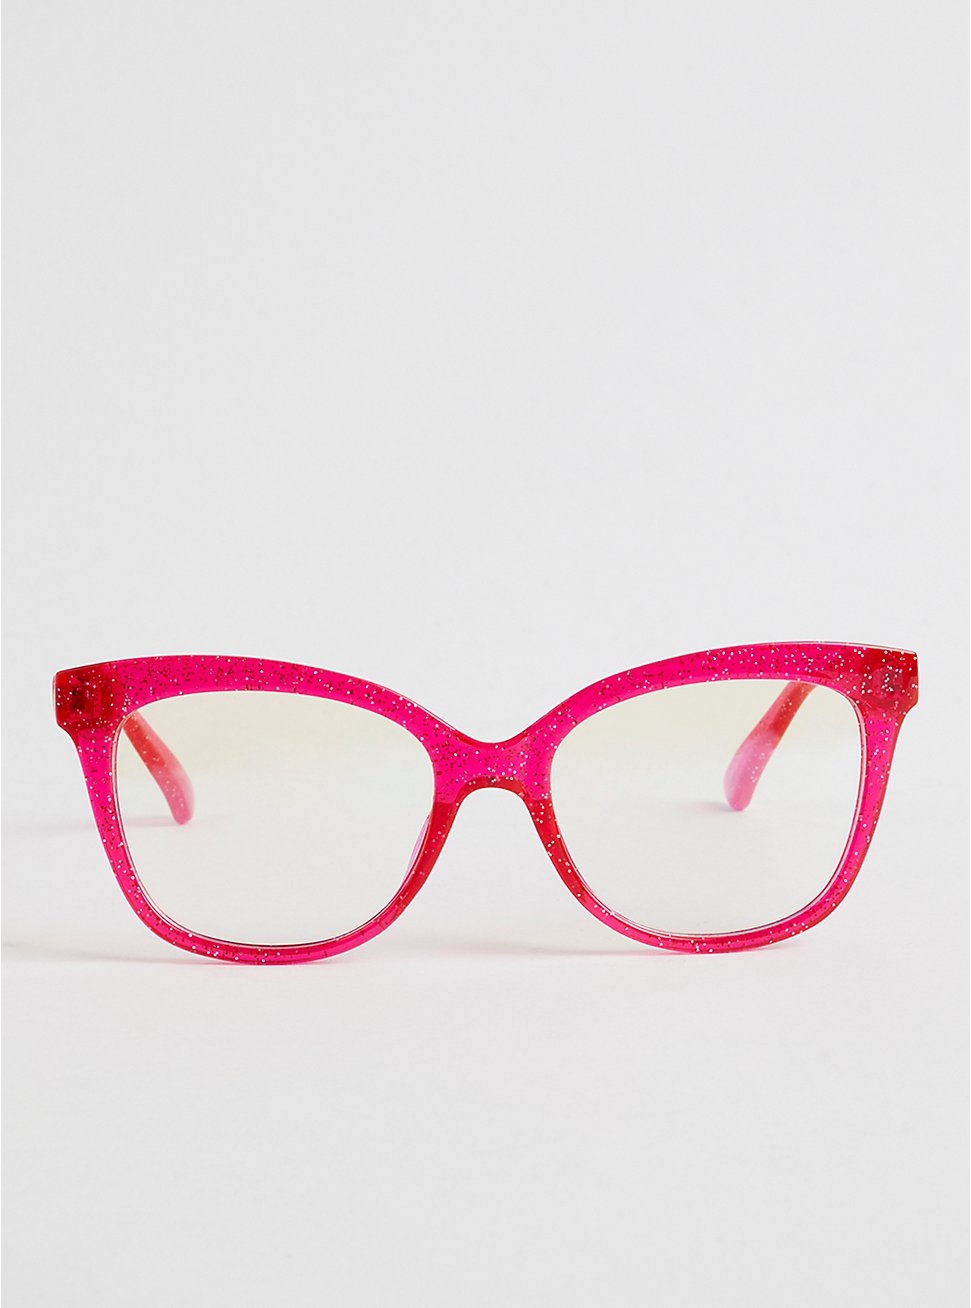 Cat Eye Bluelight Glasses - Hot Pink, , hi-res